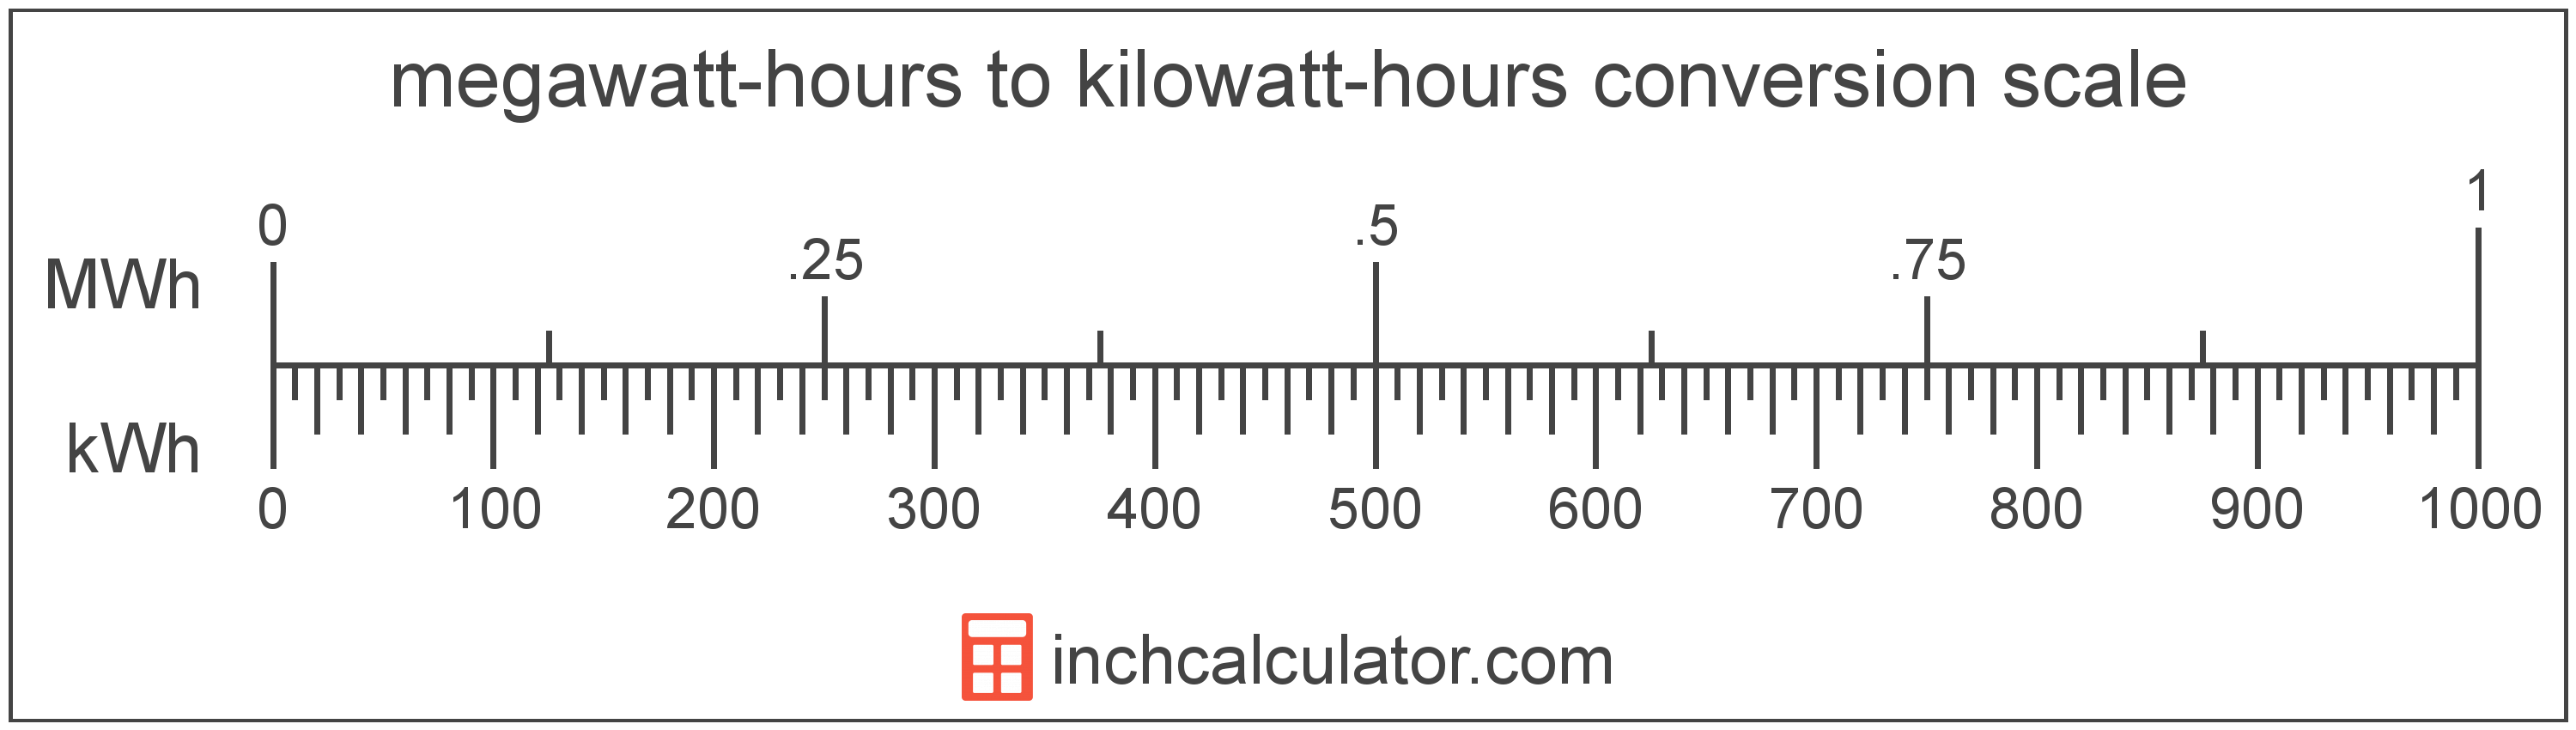 conversion scale showing megawatt-hours and equivalent kilowatt-hours energy values